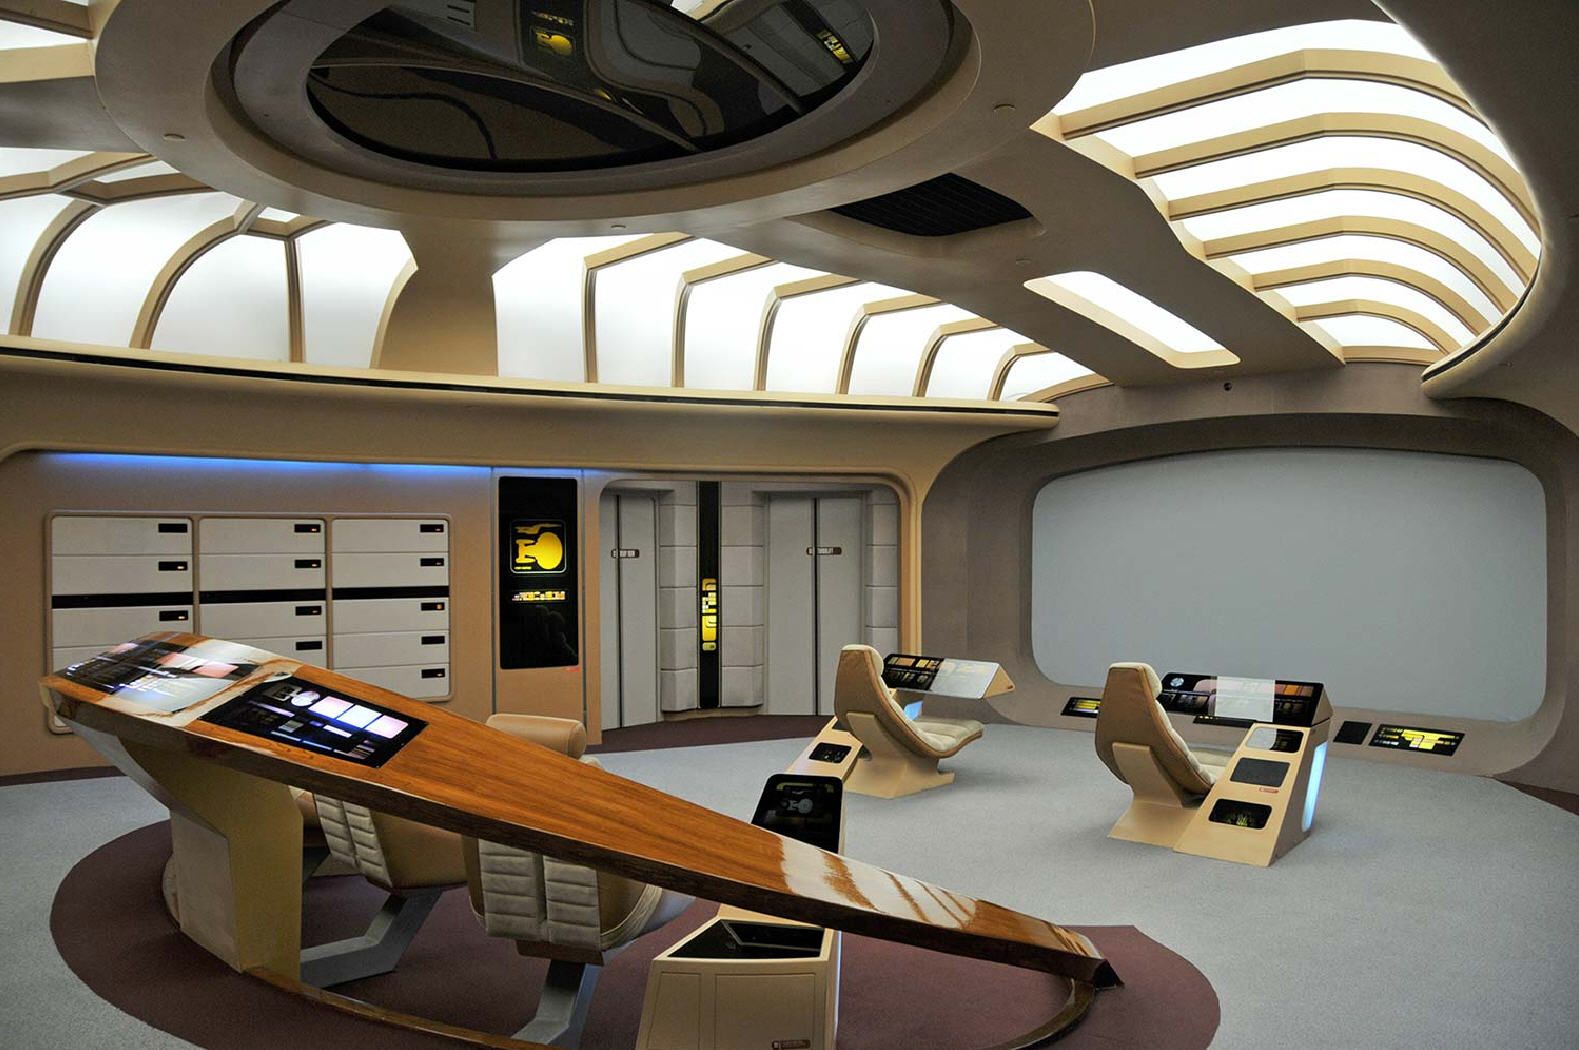 Presented Below Are Some Detailed Photo Of One Of The Two Full Scale Enterprise D Bridge Replicas From The Star Trek: The Expe. Star Trek Bridge, Star Trek, Trek